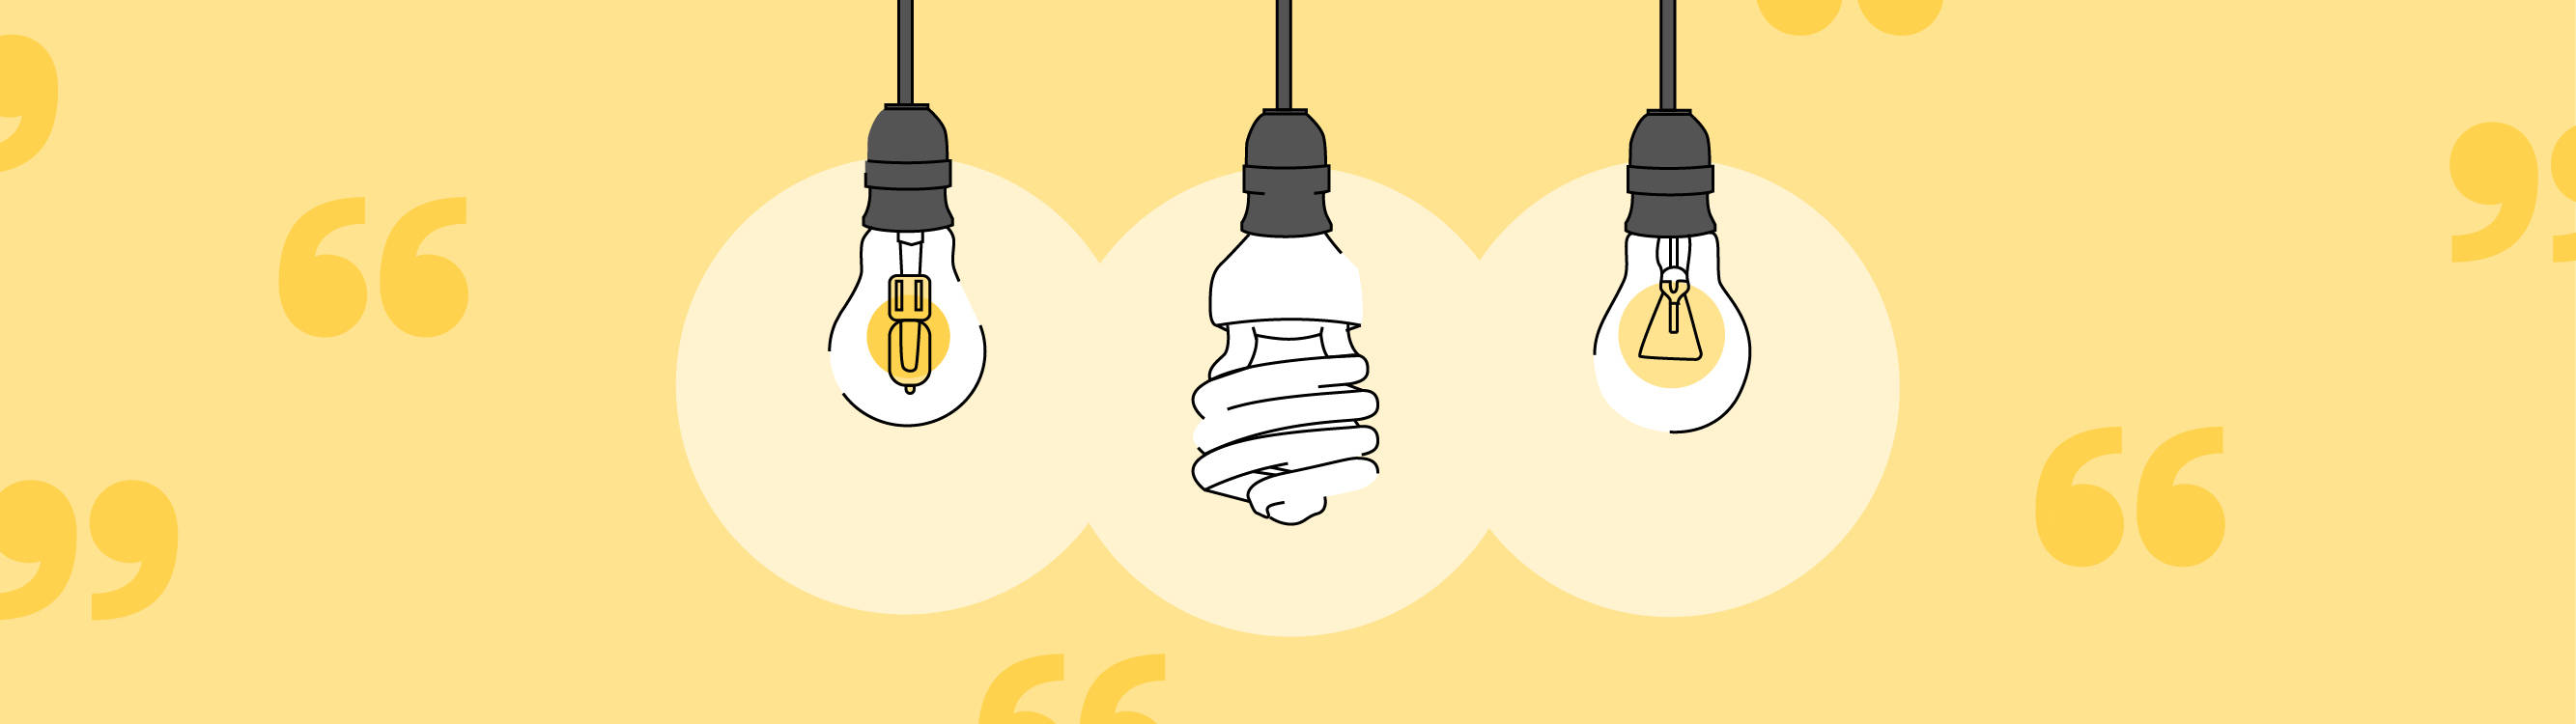 Igniting Wisdom - A Light Bulb Illustration Wallpaper